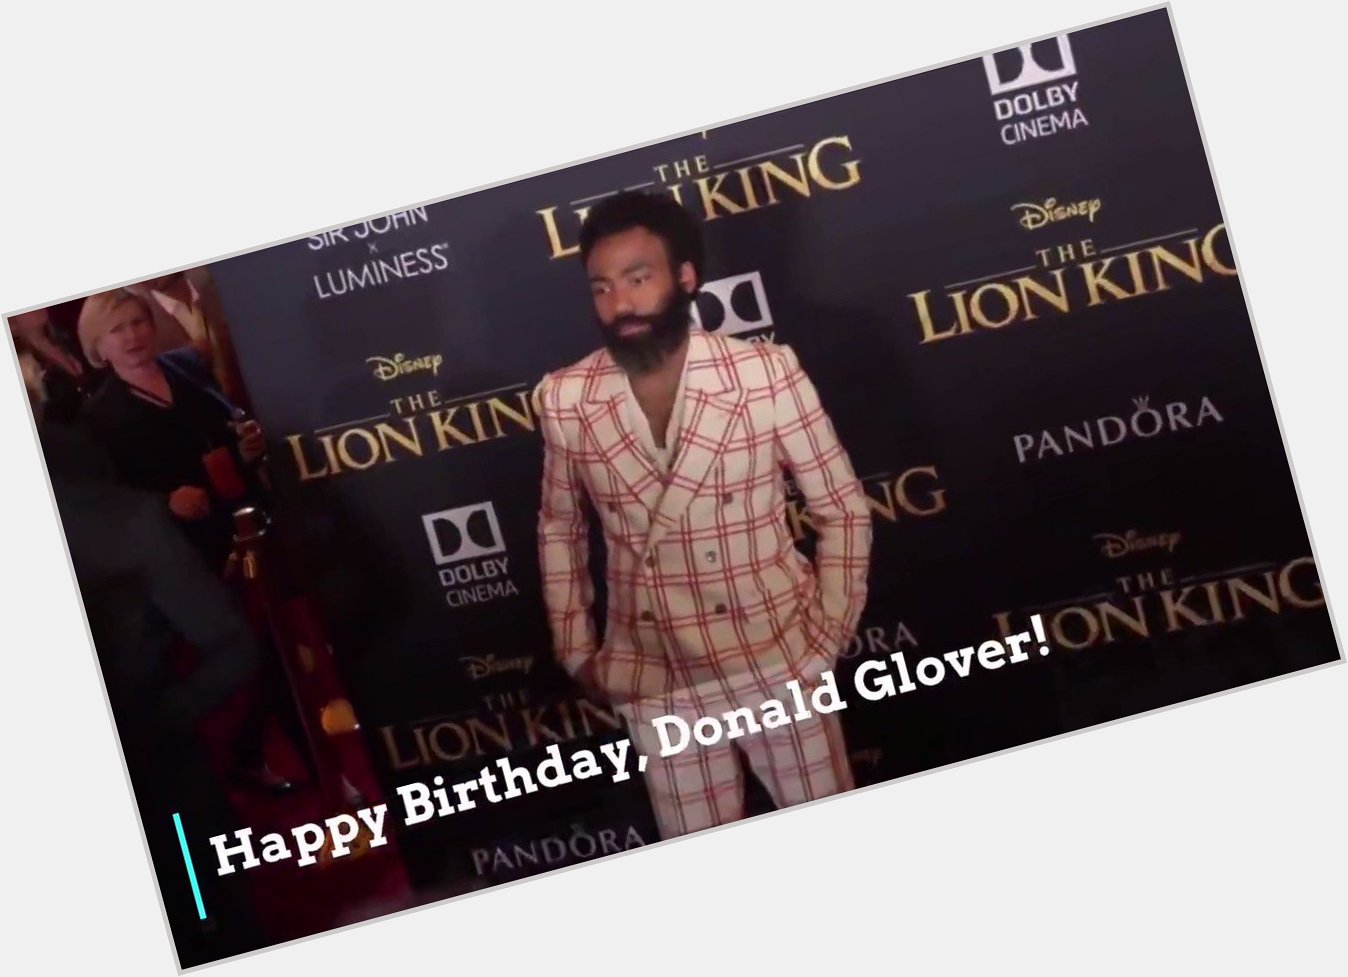 Happy Birthday, Donald Glover a.k.a Childish Gambino! 